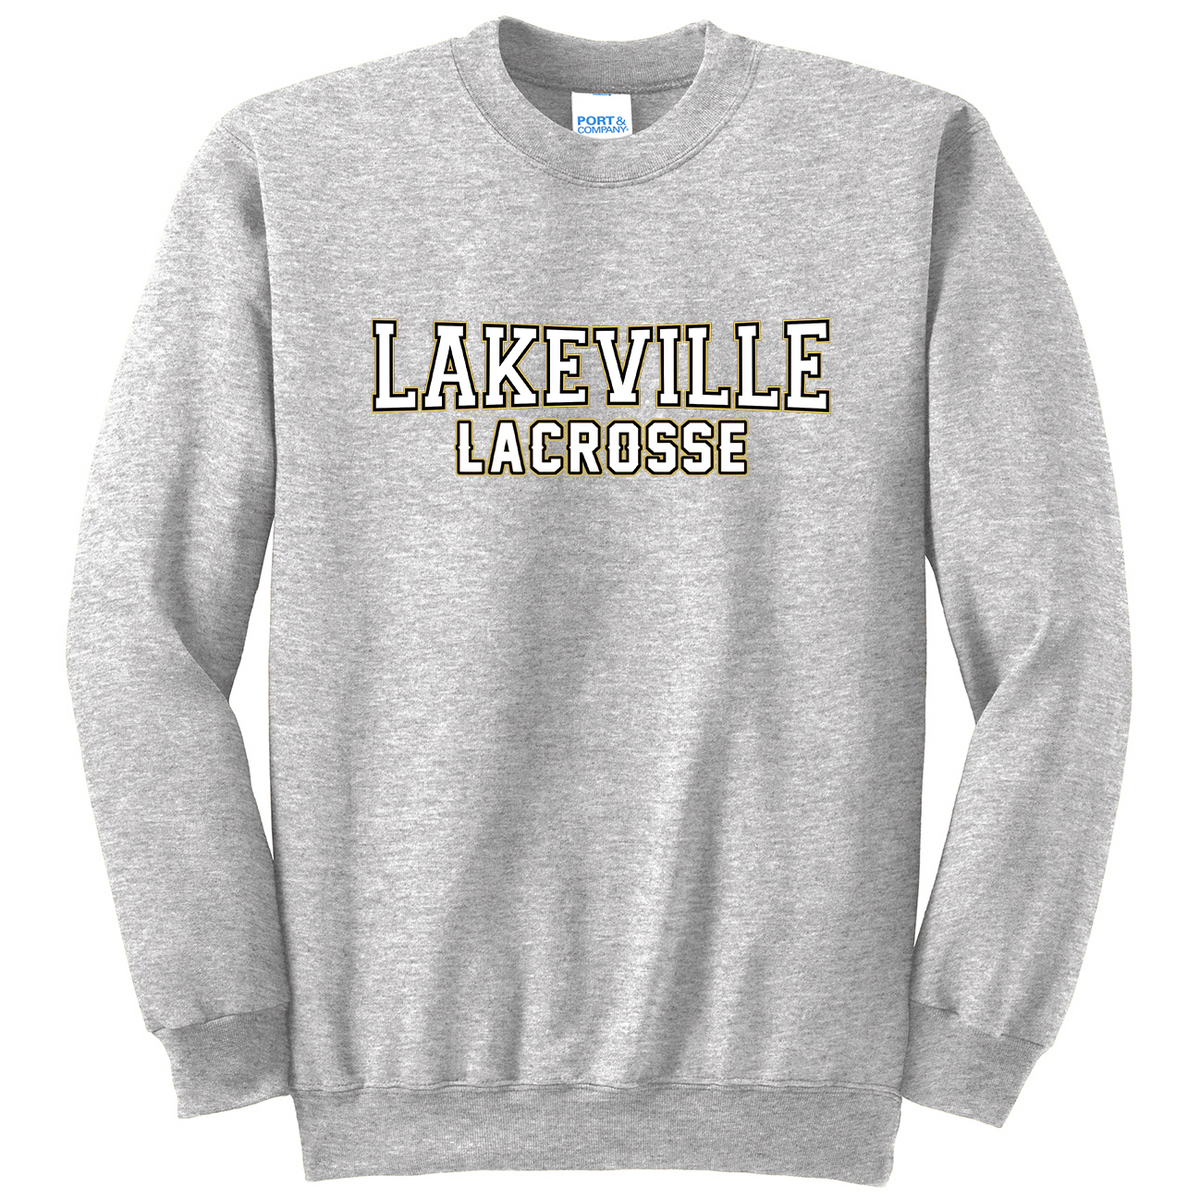 Lakeville Lacrosse Crew Neck Sweater